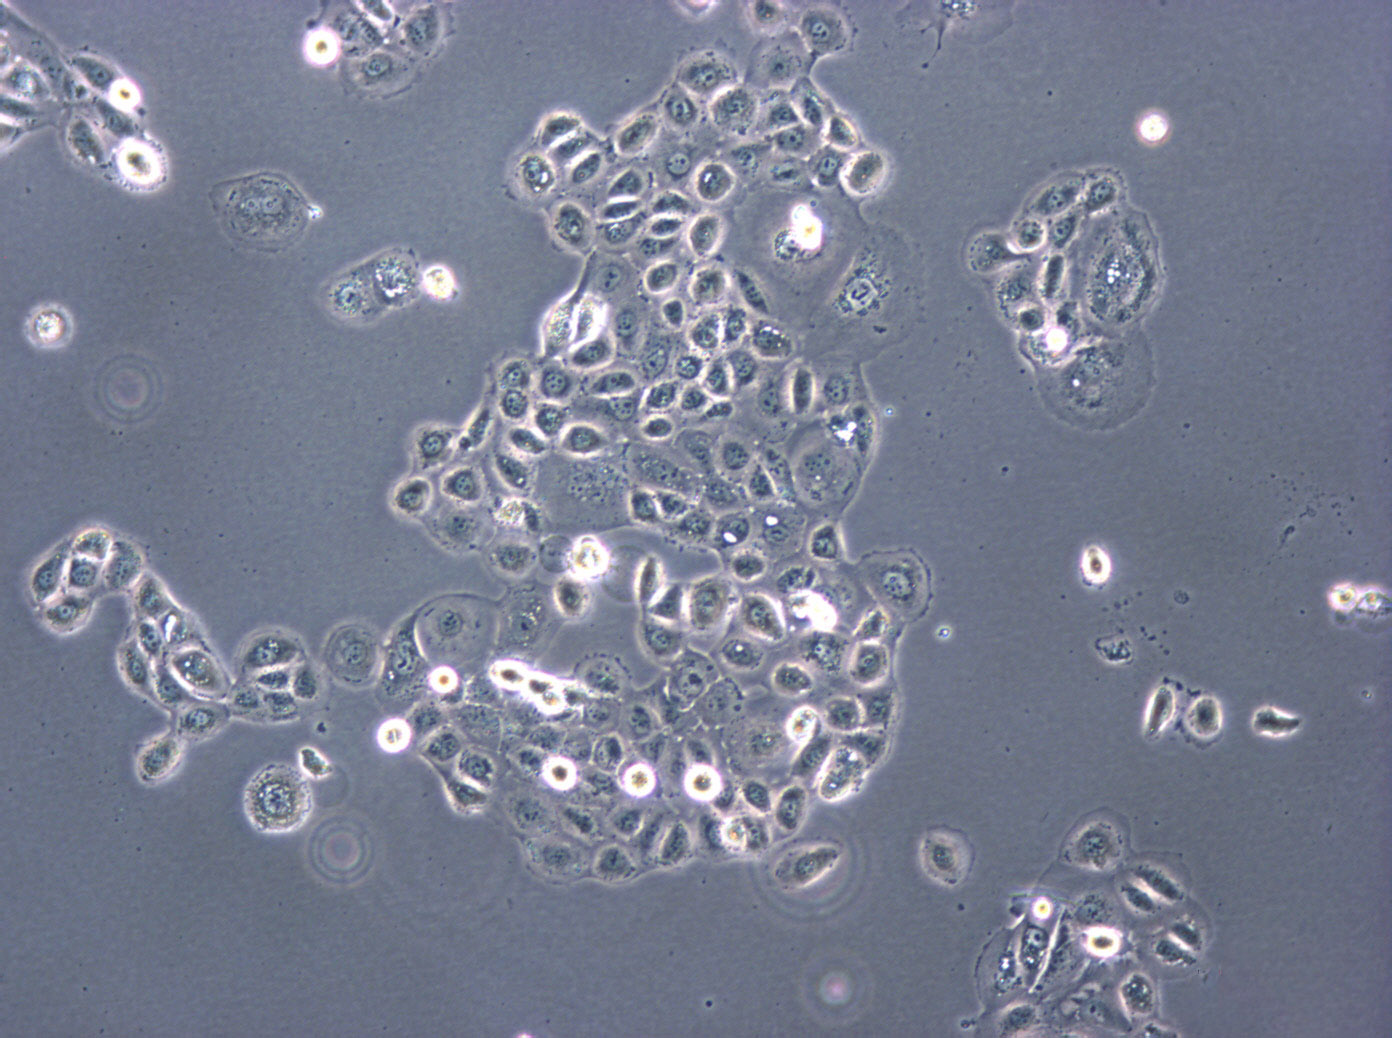 RL95-2 epithelioid cells人子宫内膜癌细胞系